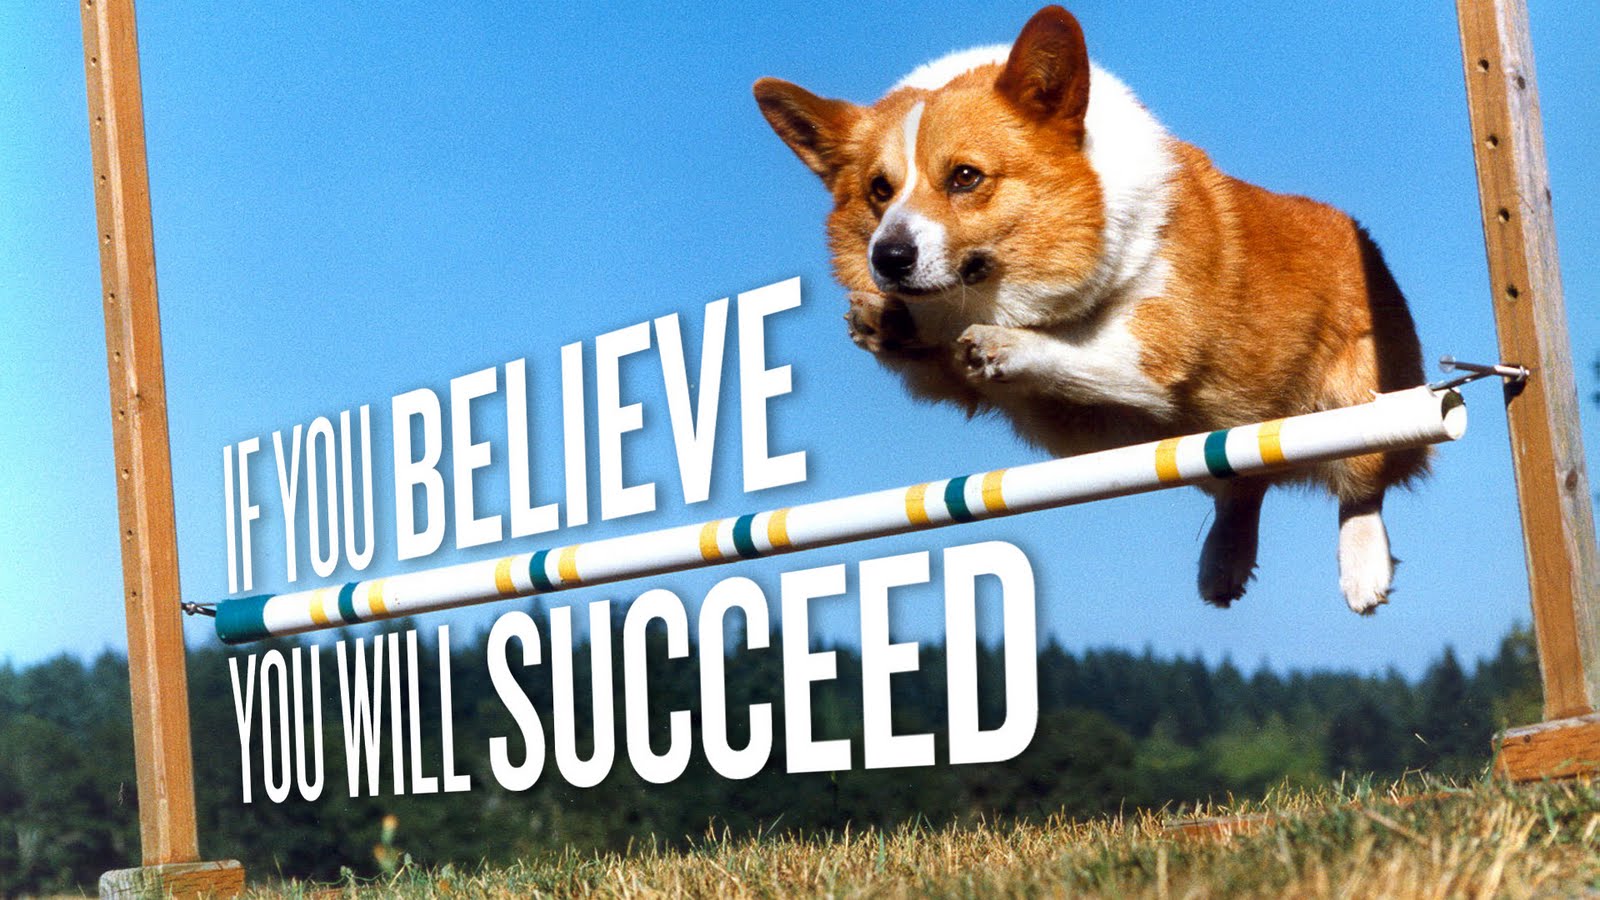 Corgie+-+If+you+believe+You+will+succeed.jpg